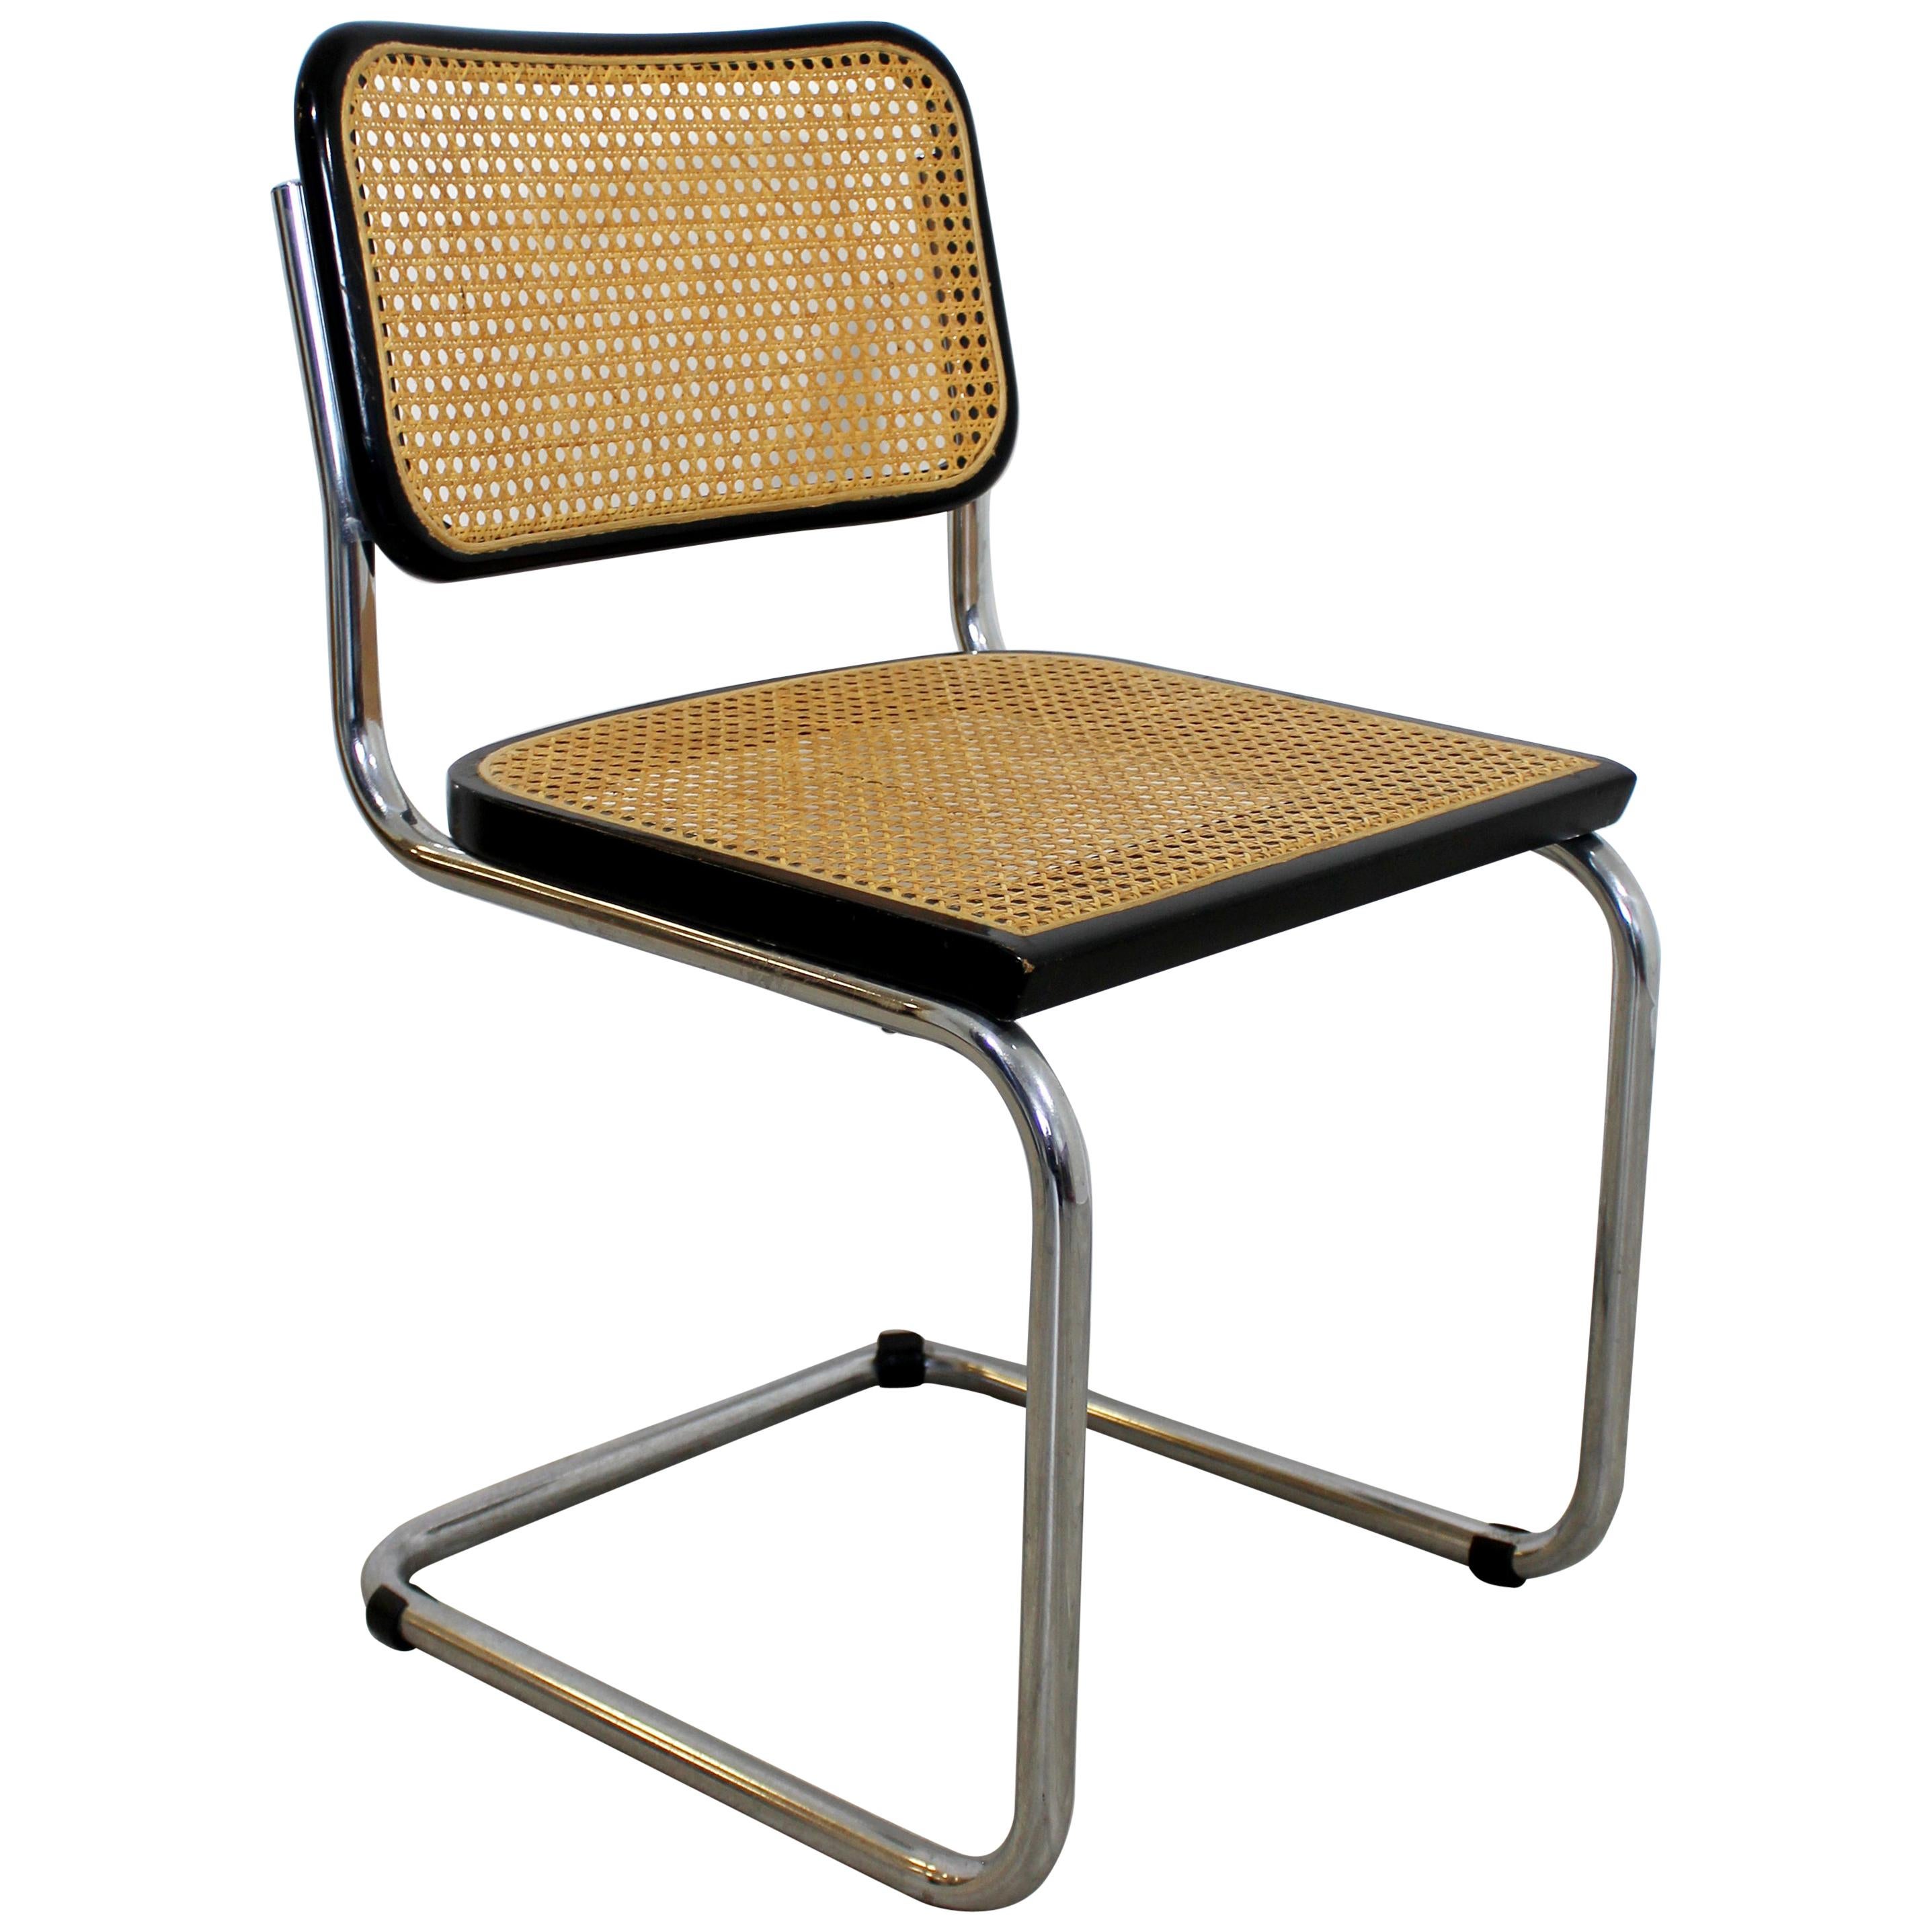 Mid-Century Modern Marcel Breuer Cesca Cantilever Chrome Side Chair, Italy 1960s